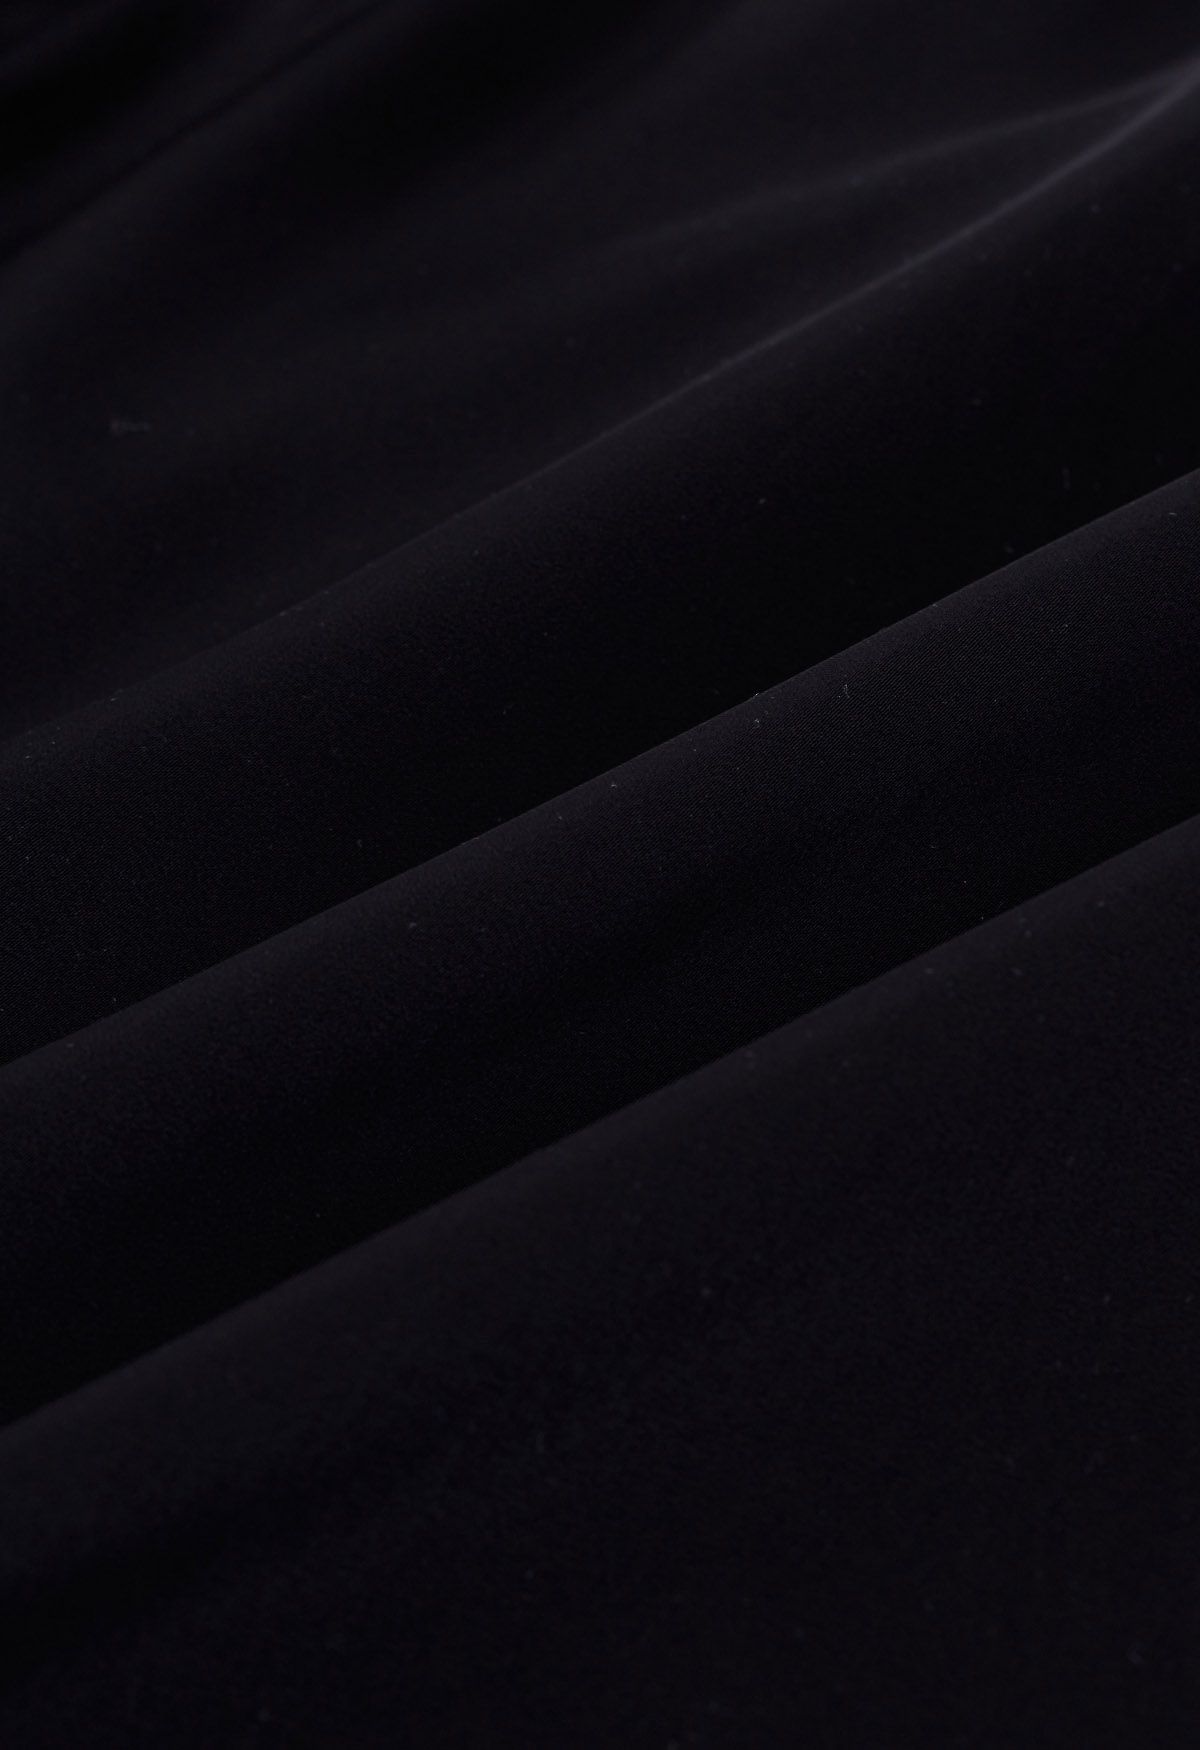 Wrap Front Short-Sleeve Spliced Top in Black